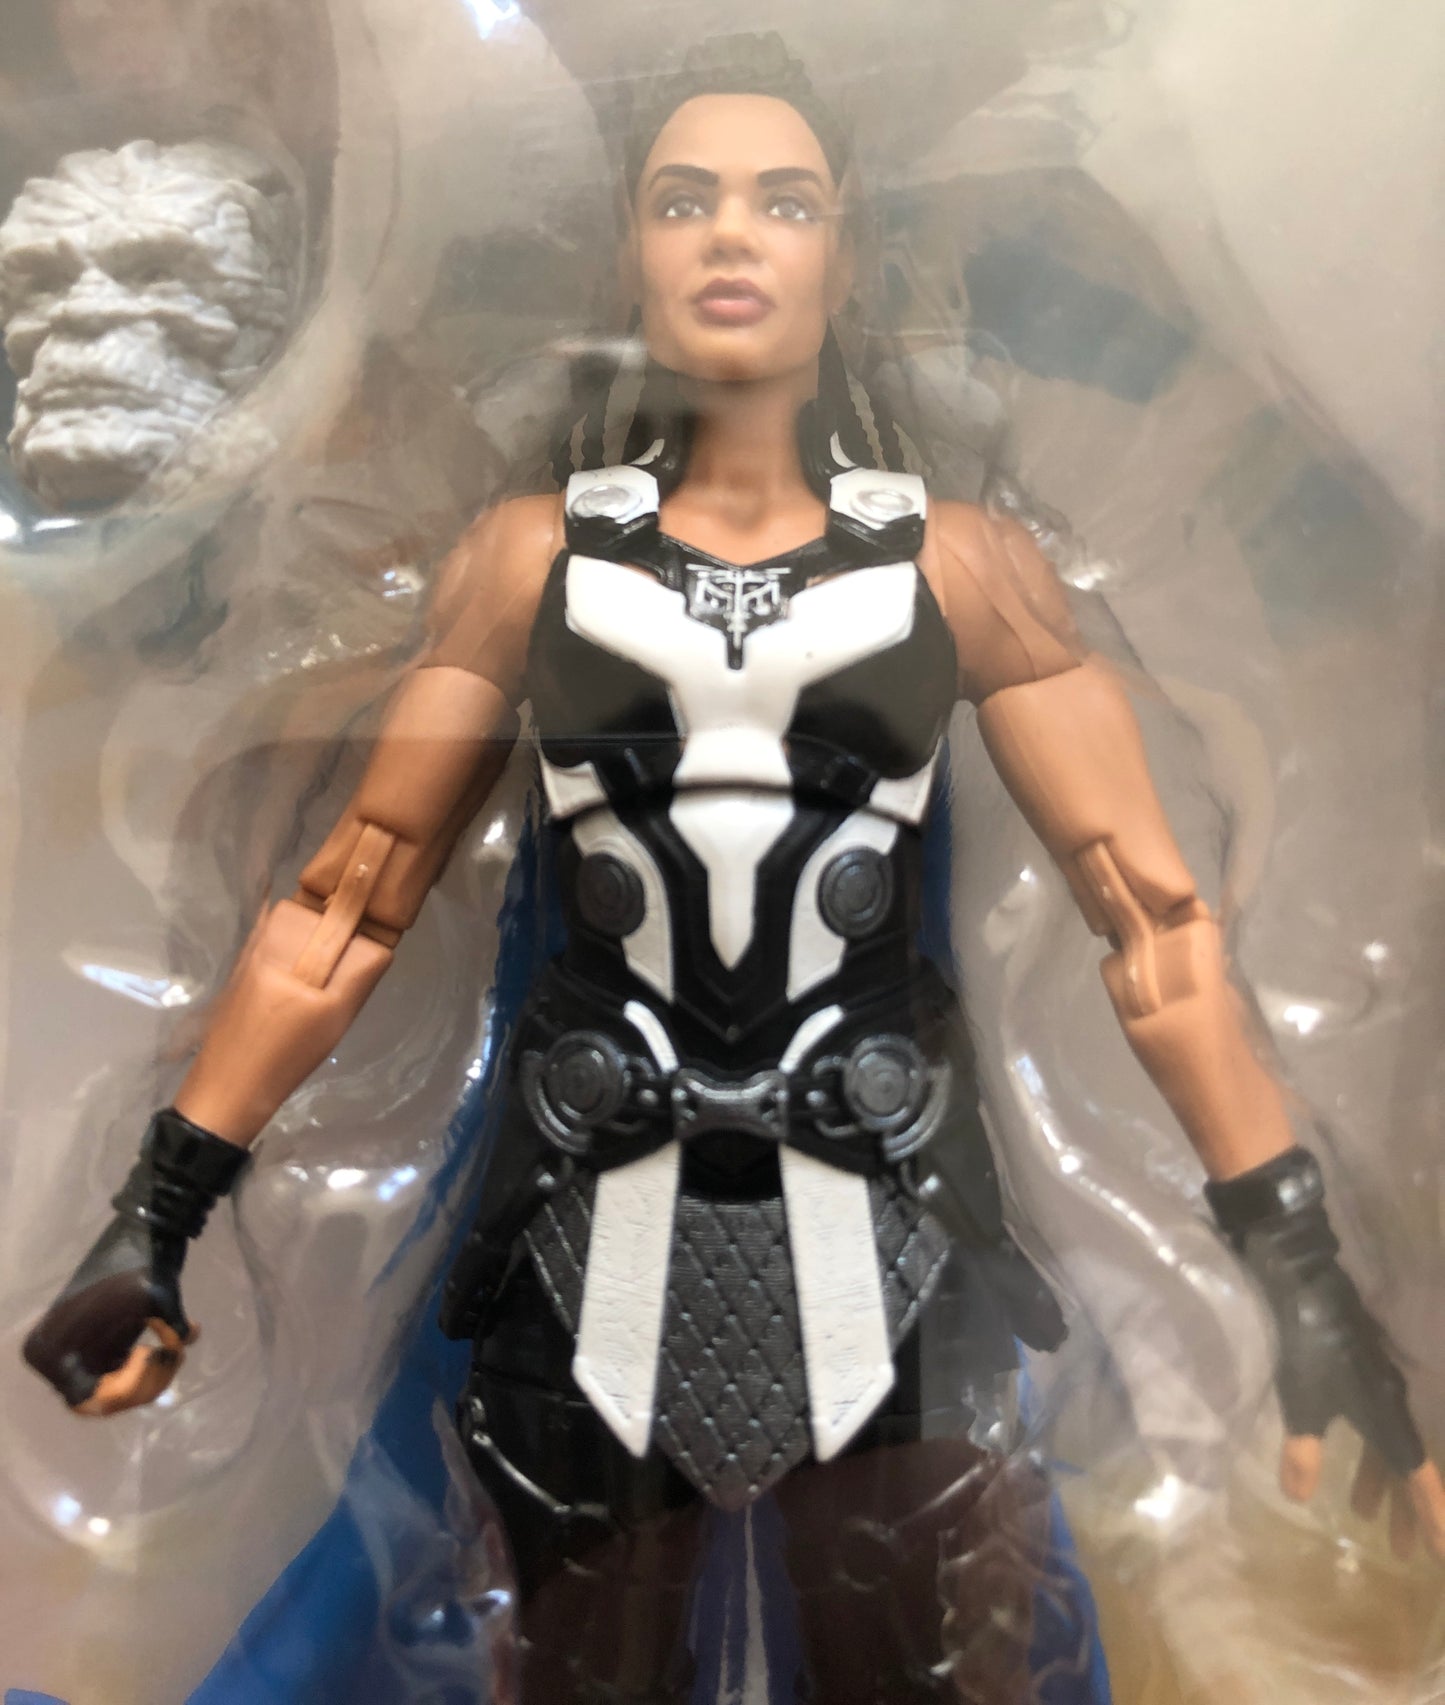 Marvel Legends - BAF KORG - Thor Love & Thunder - Figurine KING VALKYRIE